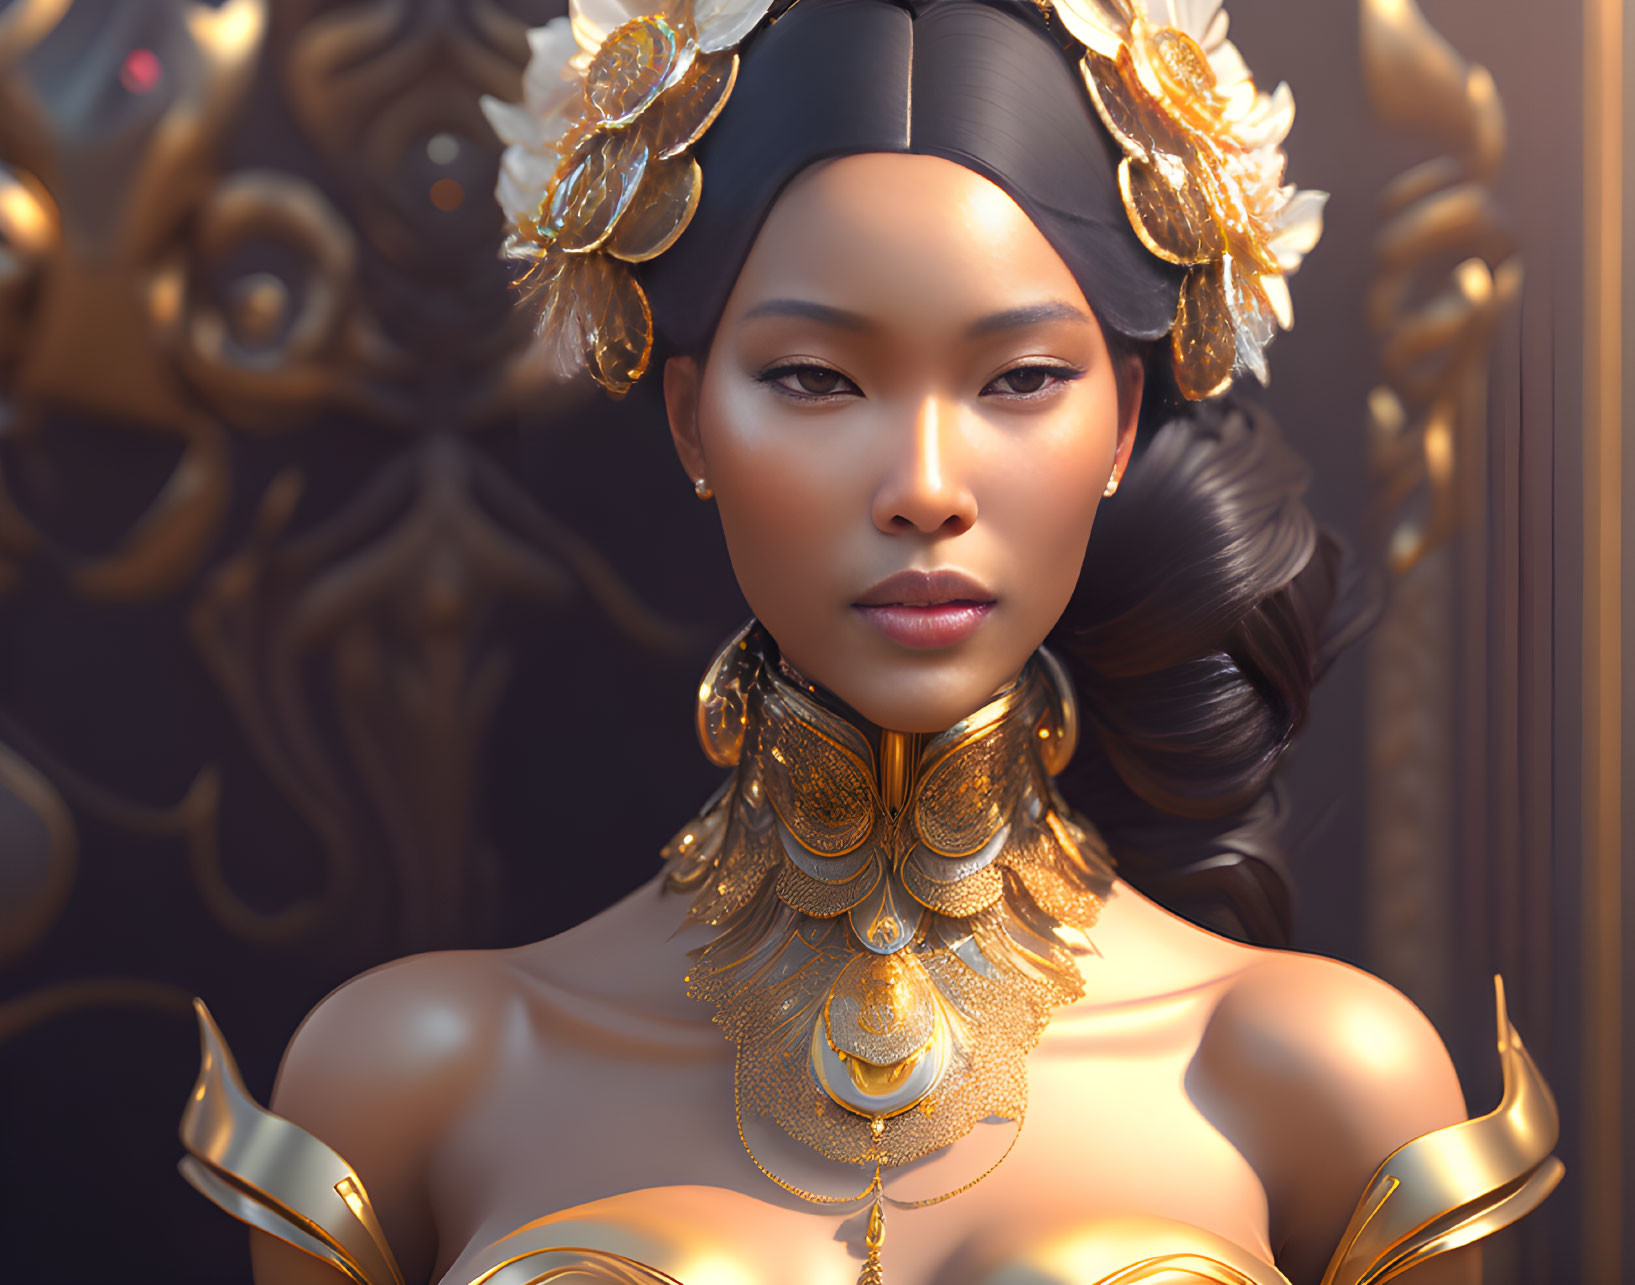 Elaborate Golden Jewelry Adorns Woman in Digital Portrait